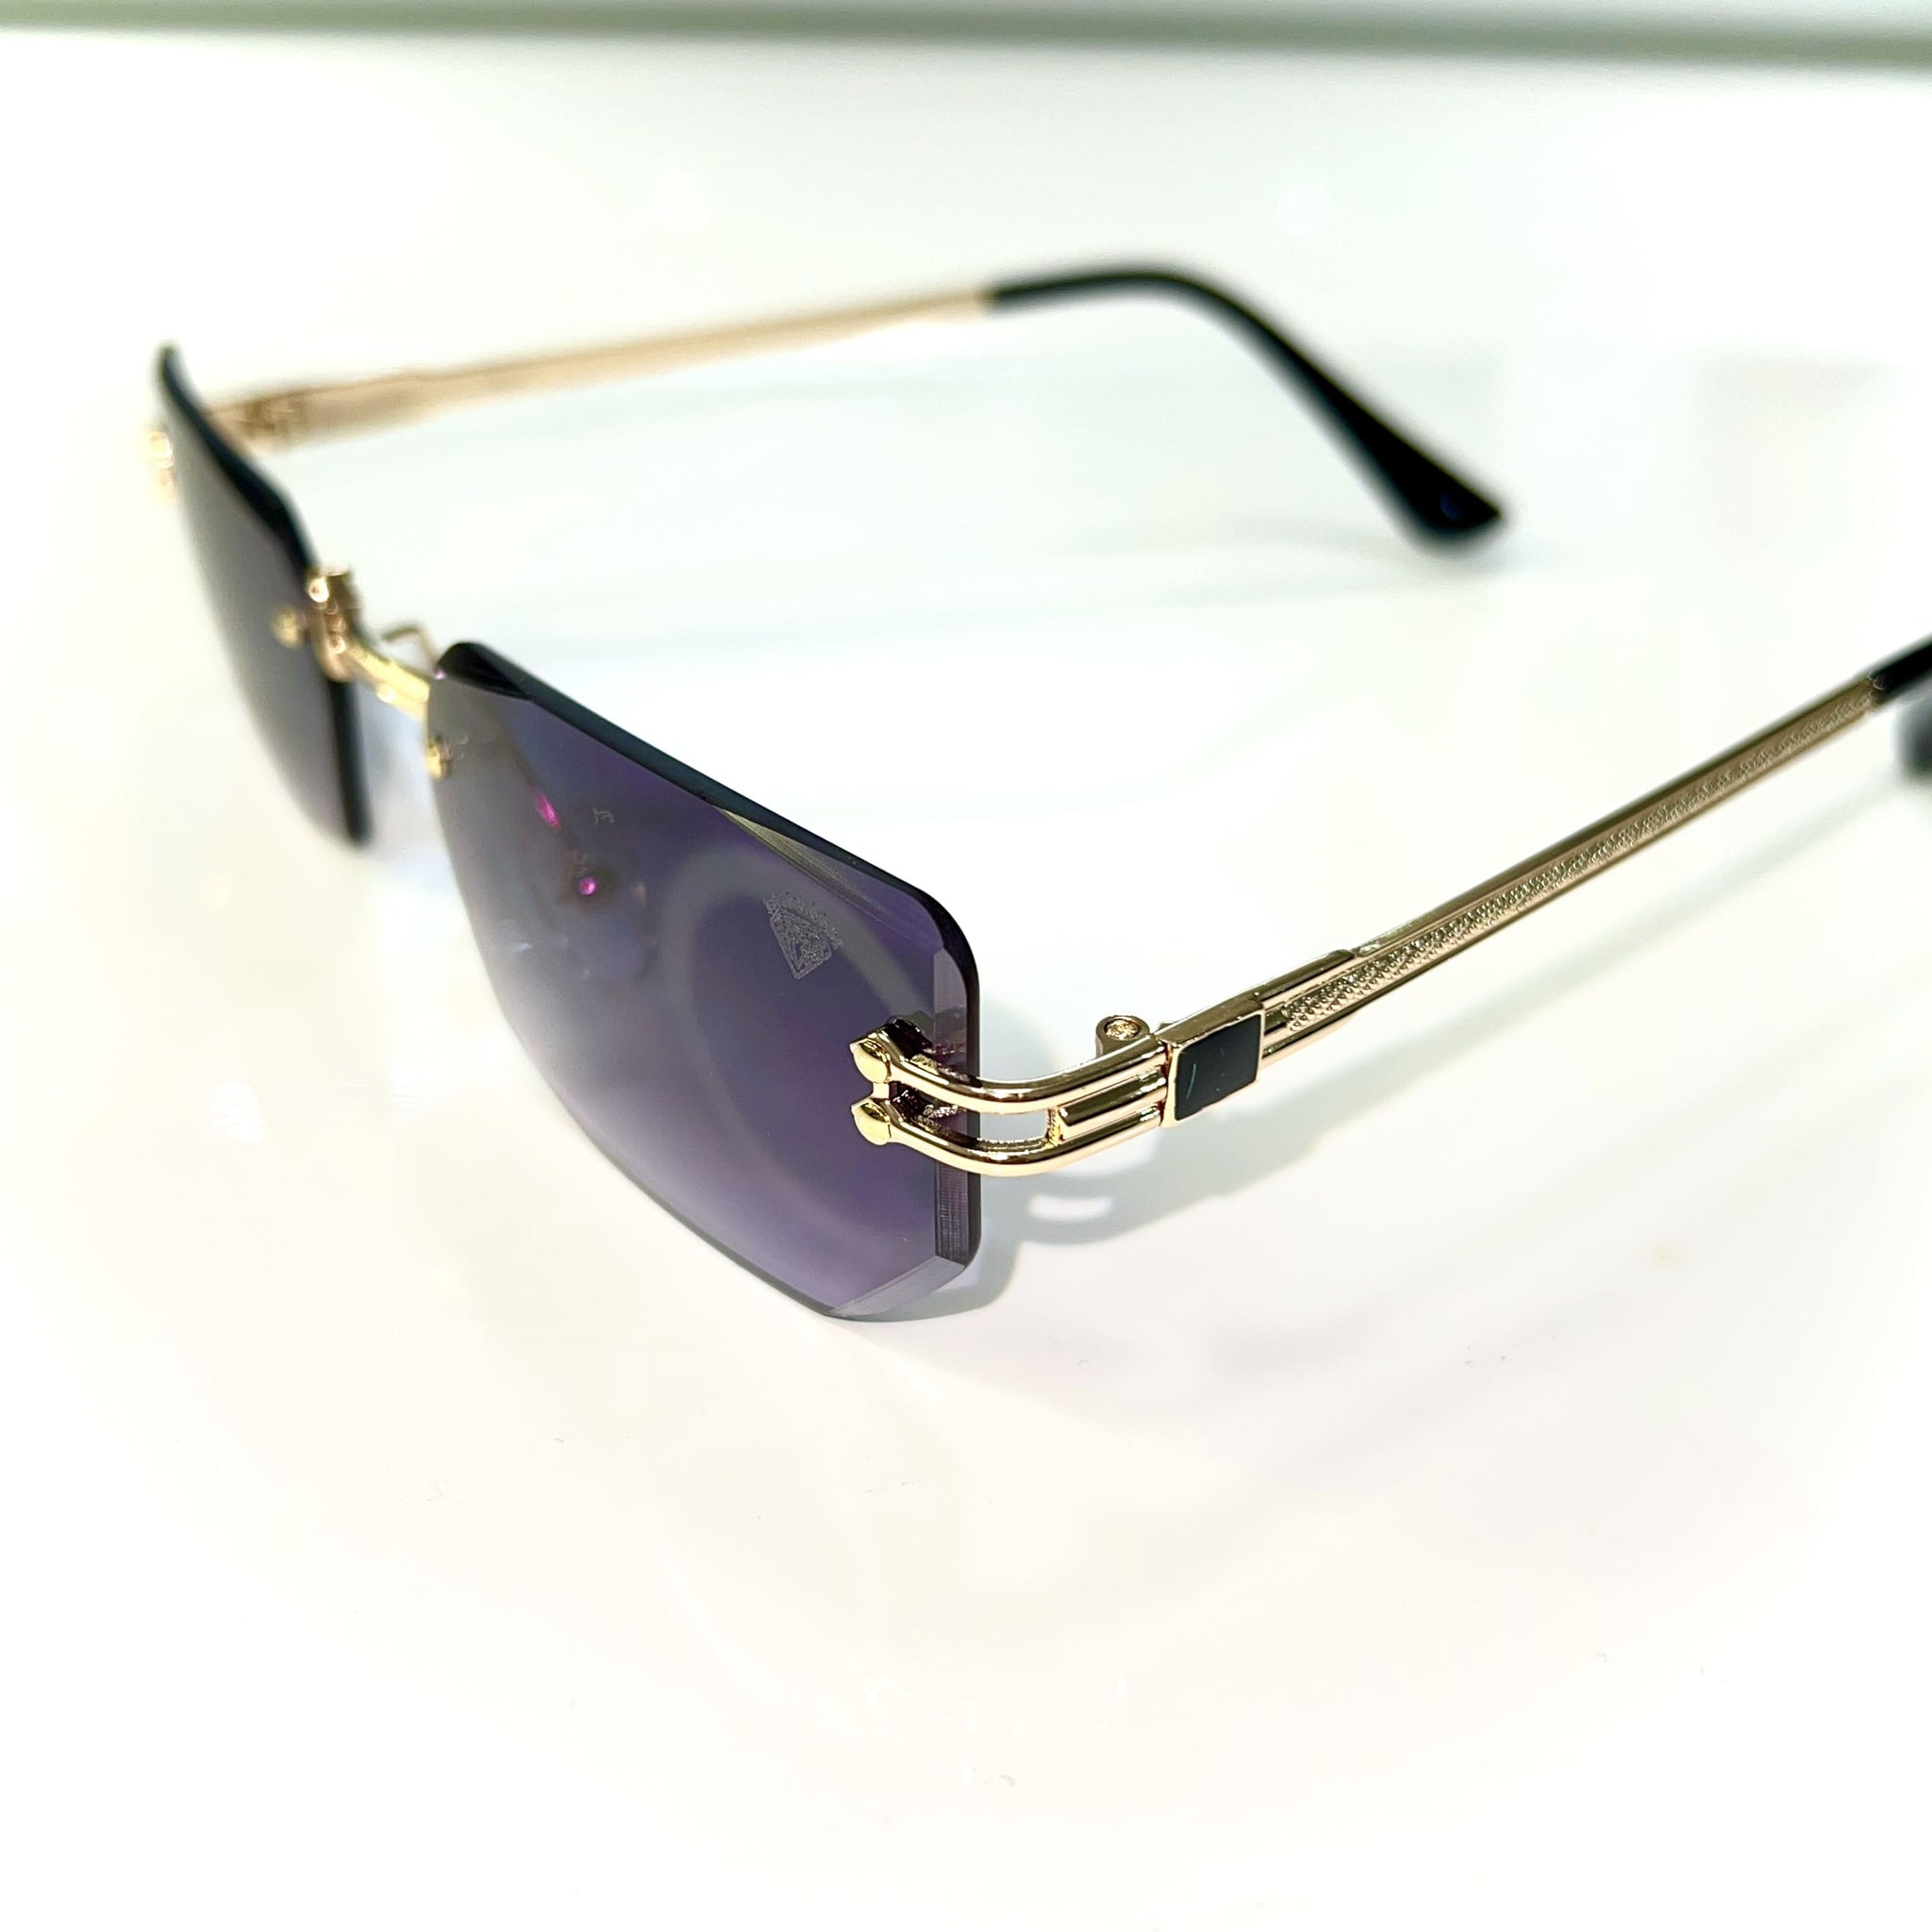 Rich Glasses - Diamond Cut - 14k gold plated - Black Shade - Sehgal Glasses